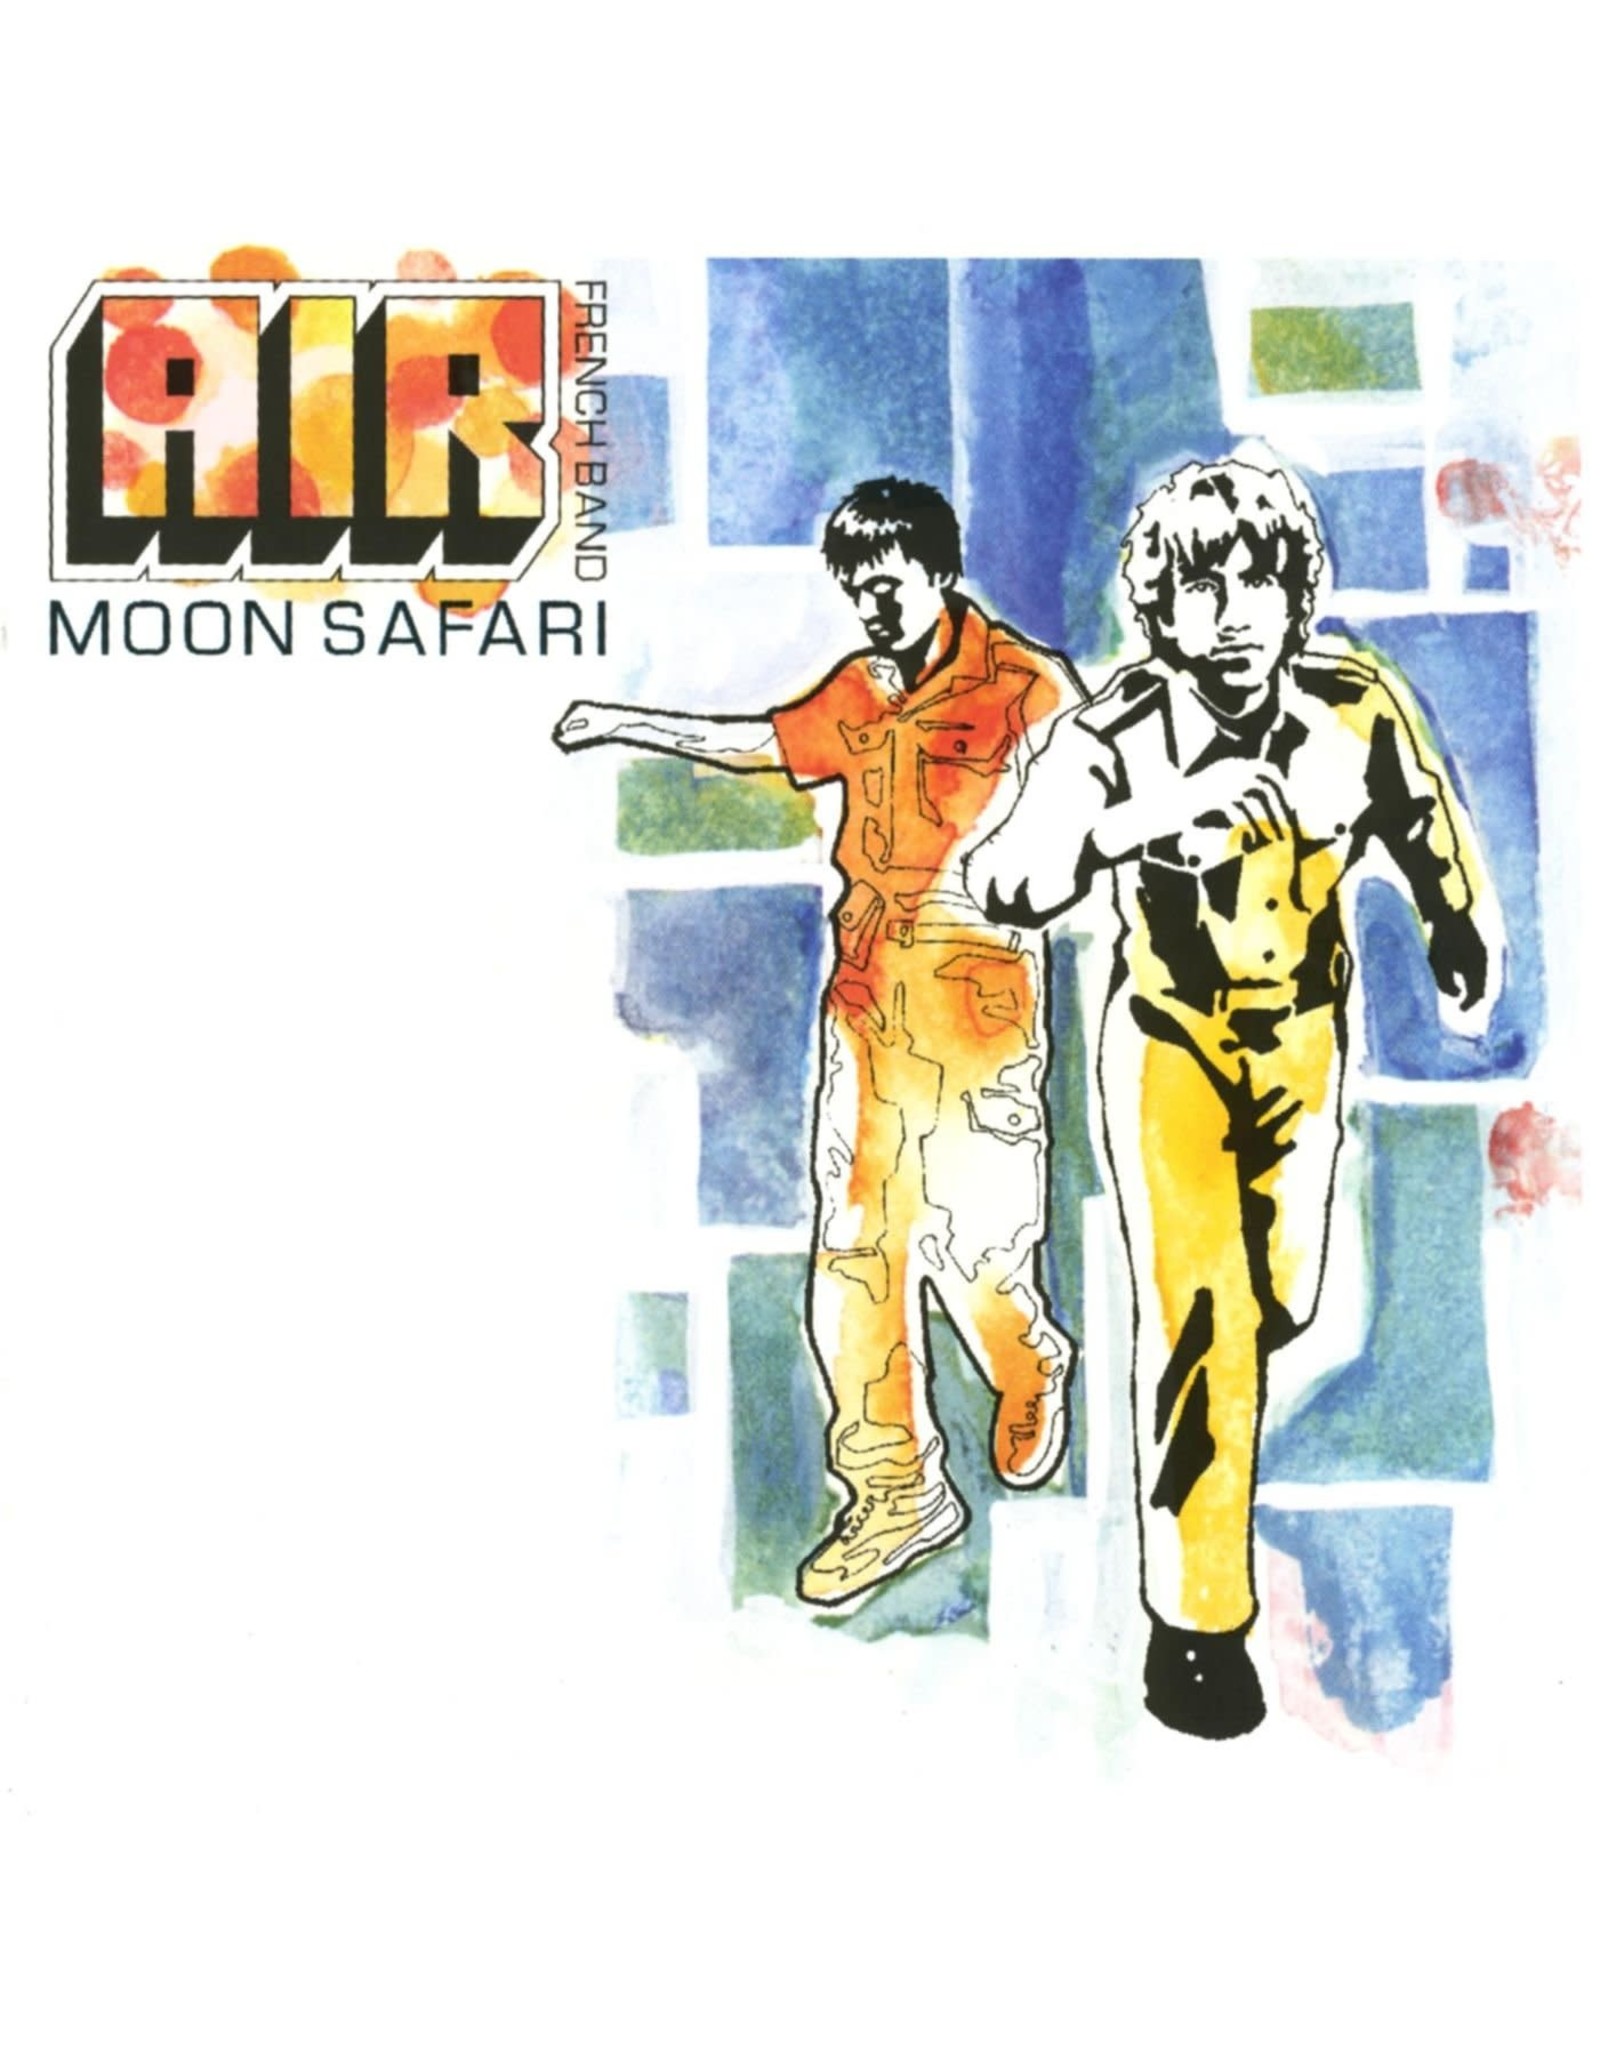 New Vinyl Air - Moon Safari LP